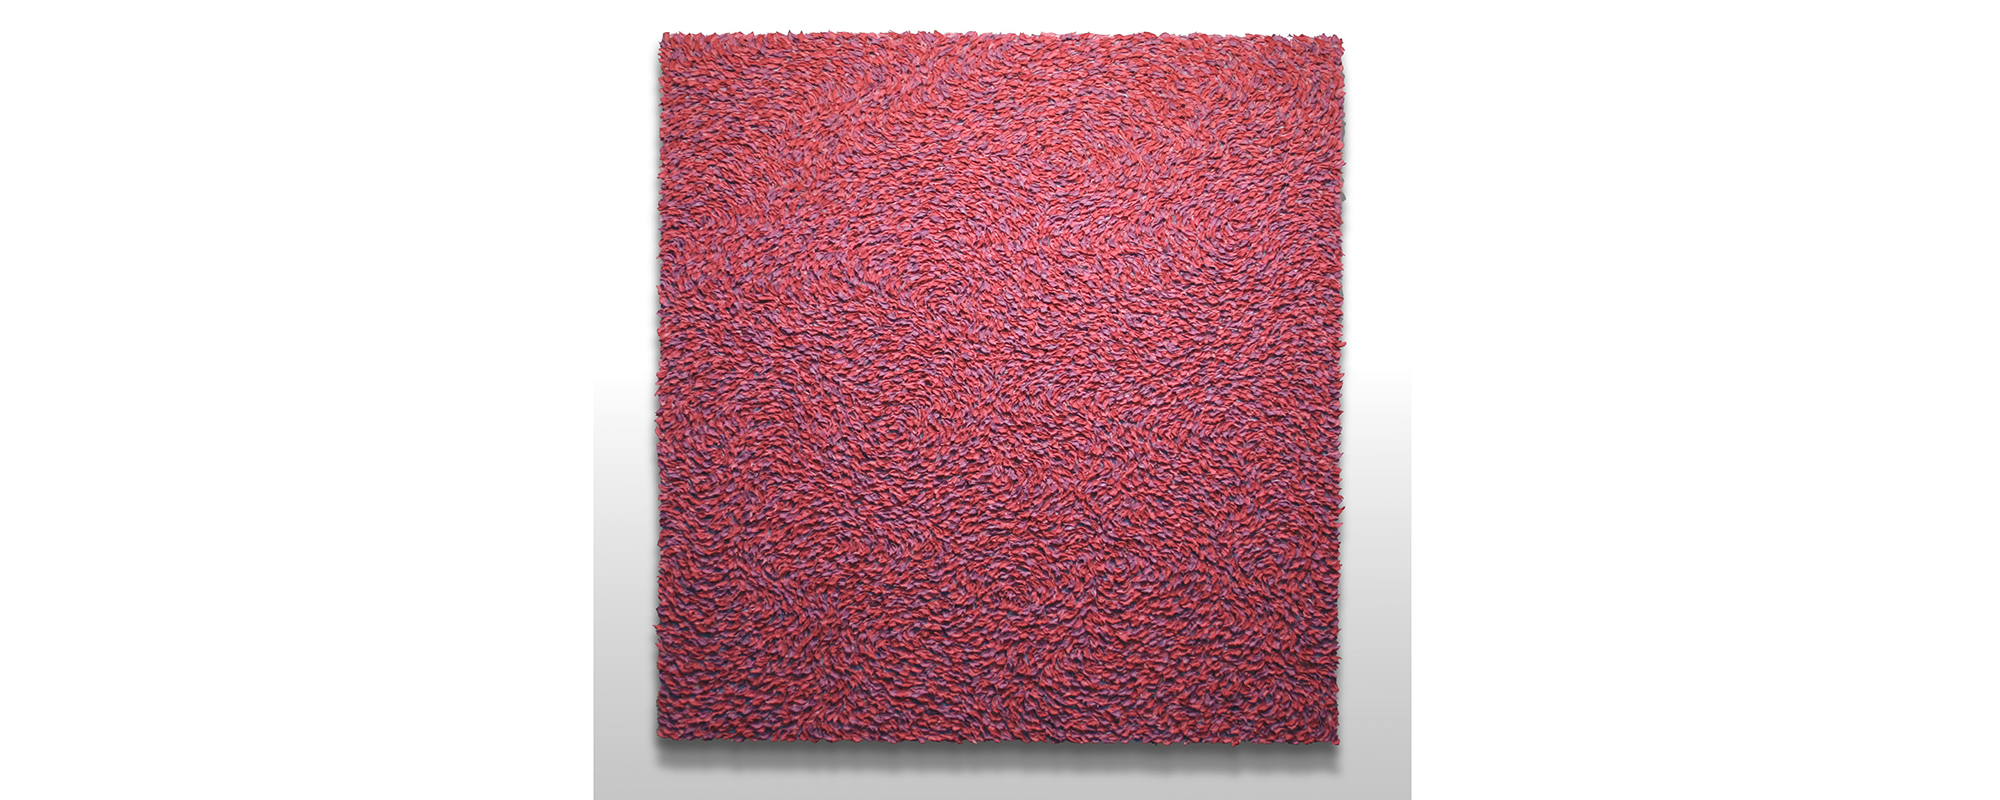 “25,908” – 2016, Öl auf Leinwand, 122 x 117 cm